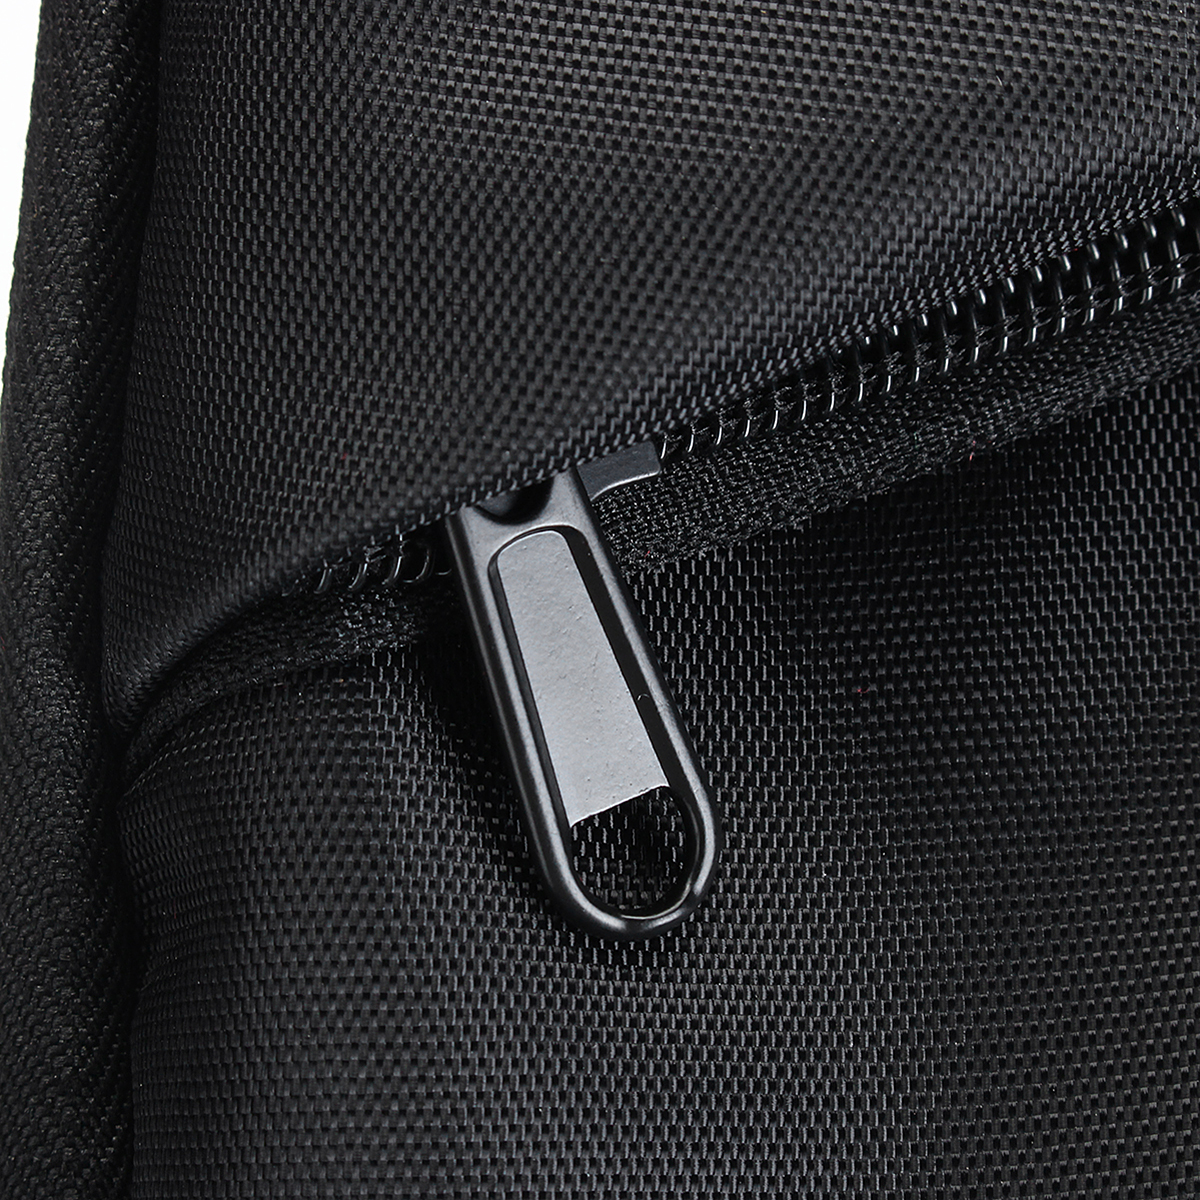 Find Waterproof Shoulder Bag Backpack Rucksack With Reflective Stripe For DSLR Camera for Sale on Gipsybee.com with cryptocurrencies